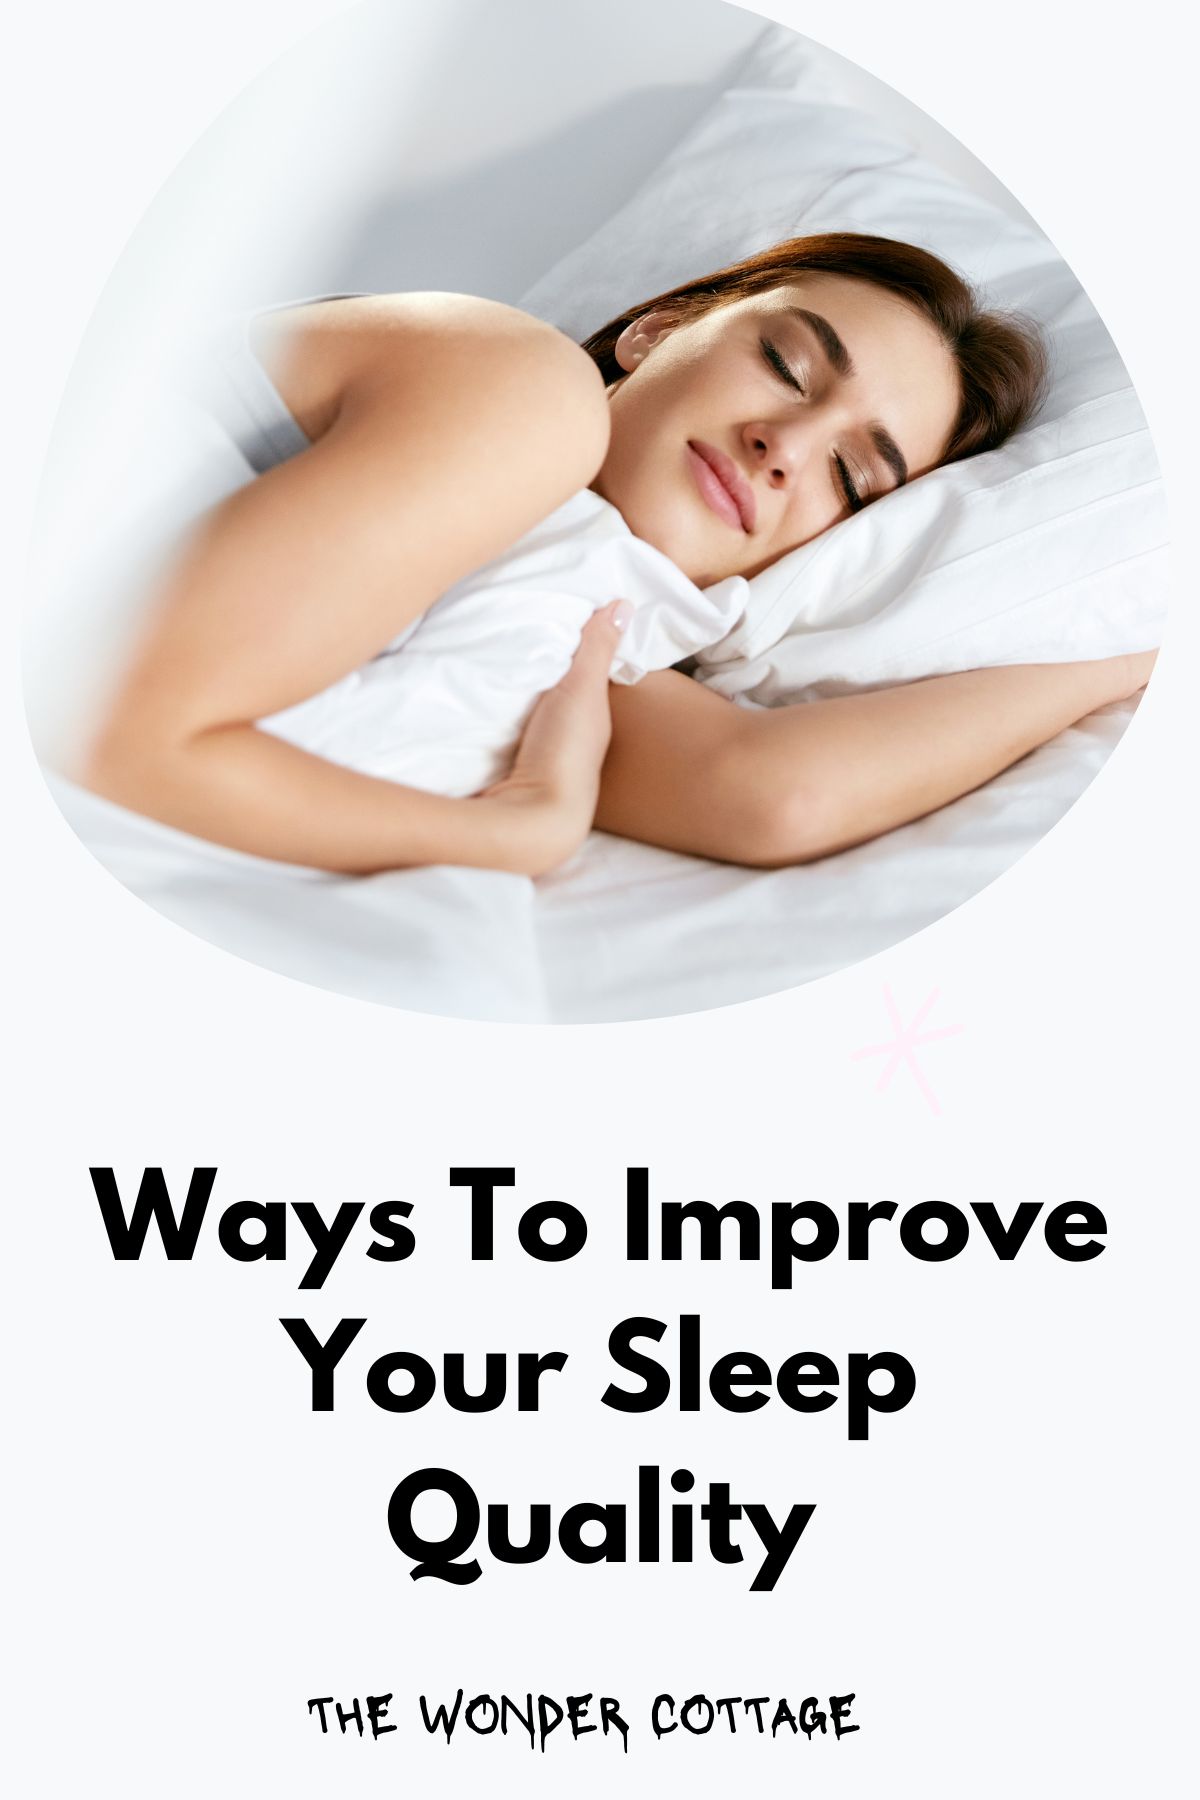 10 Ways To Improve Your Sleep Quality